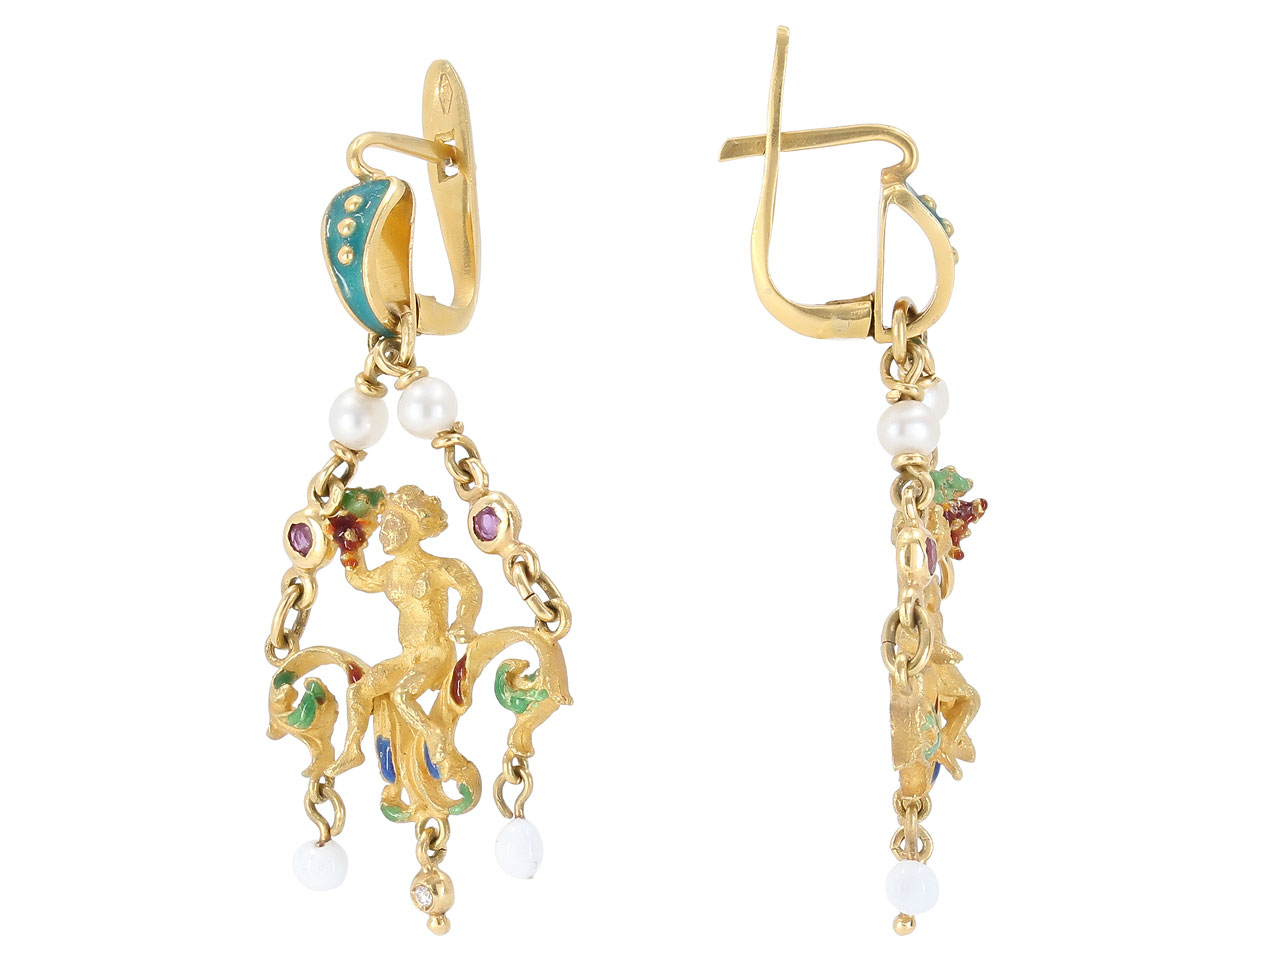 Bridal earrings, wedding earrings, antique gold leaf and rhinestone earrings  - Style #7015 | Twigs & Honey ®, LLC